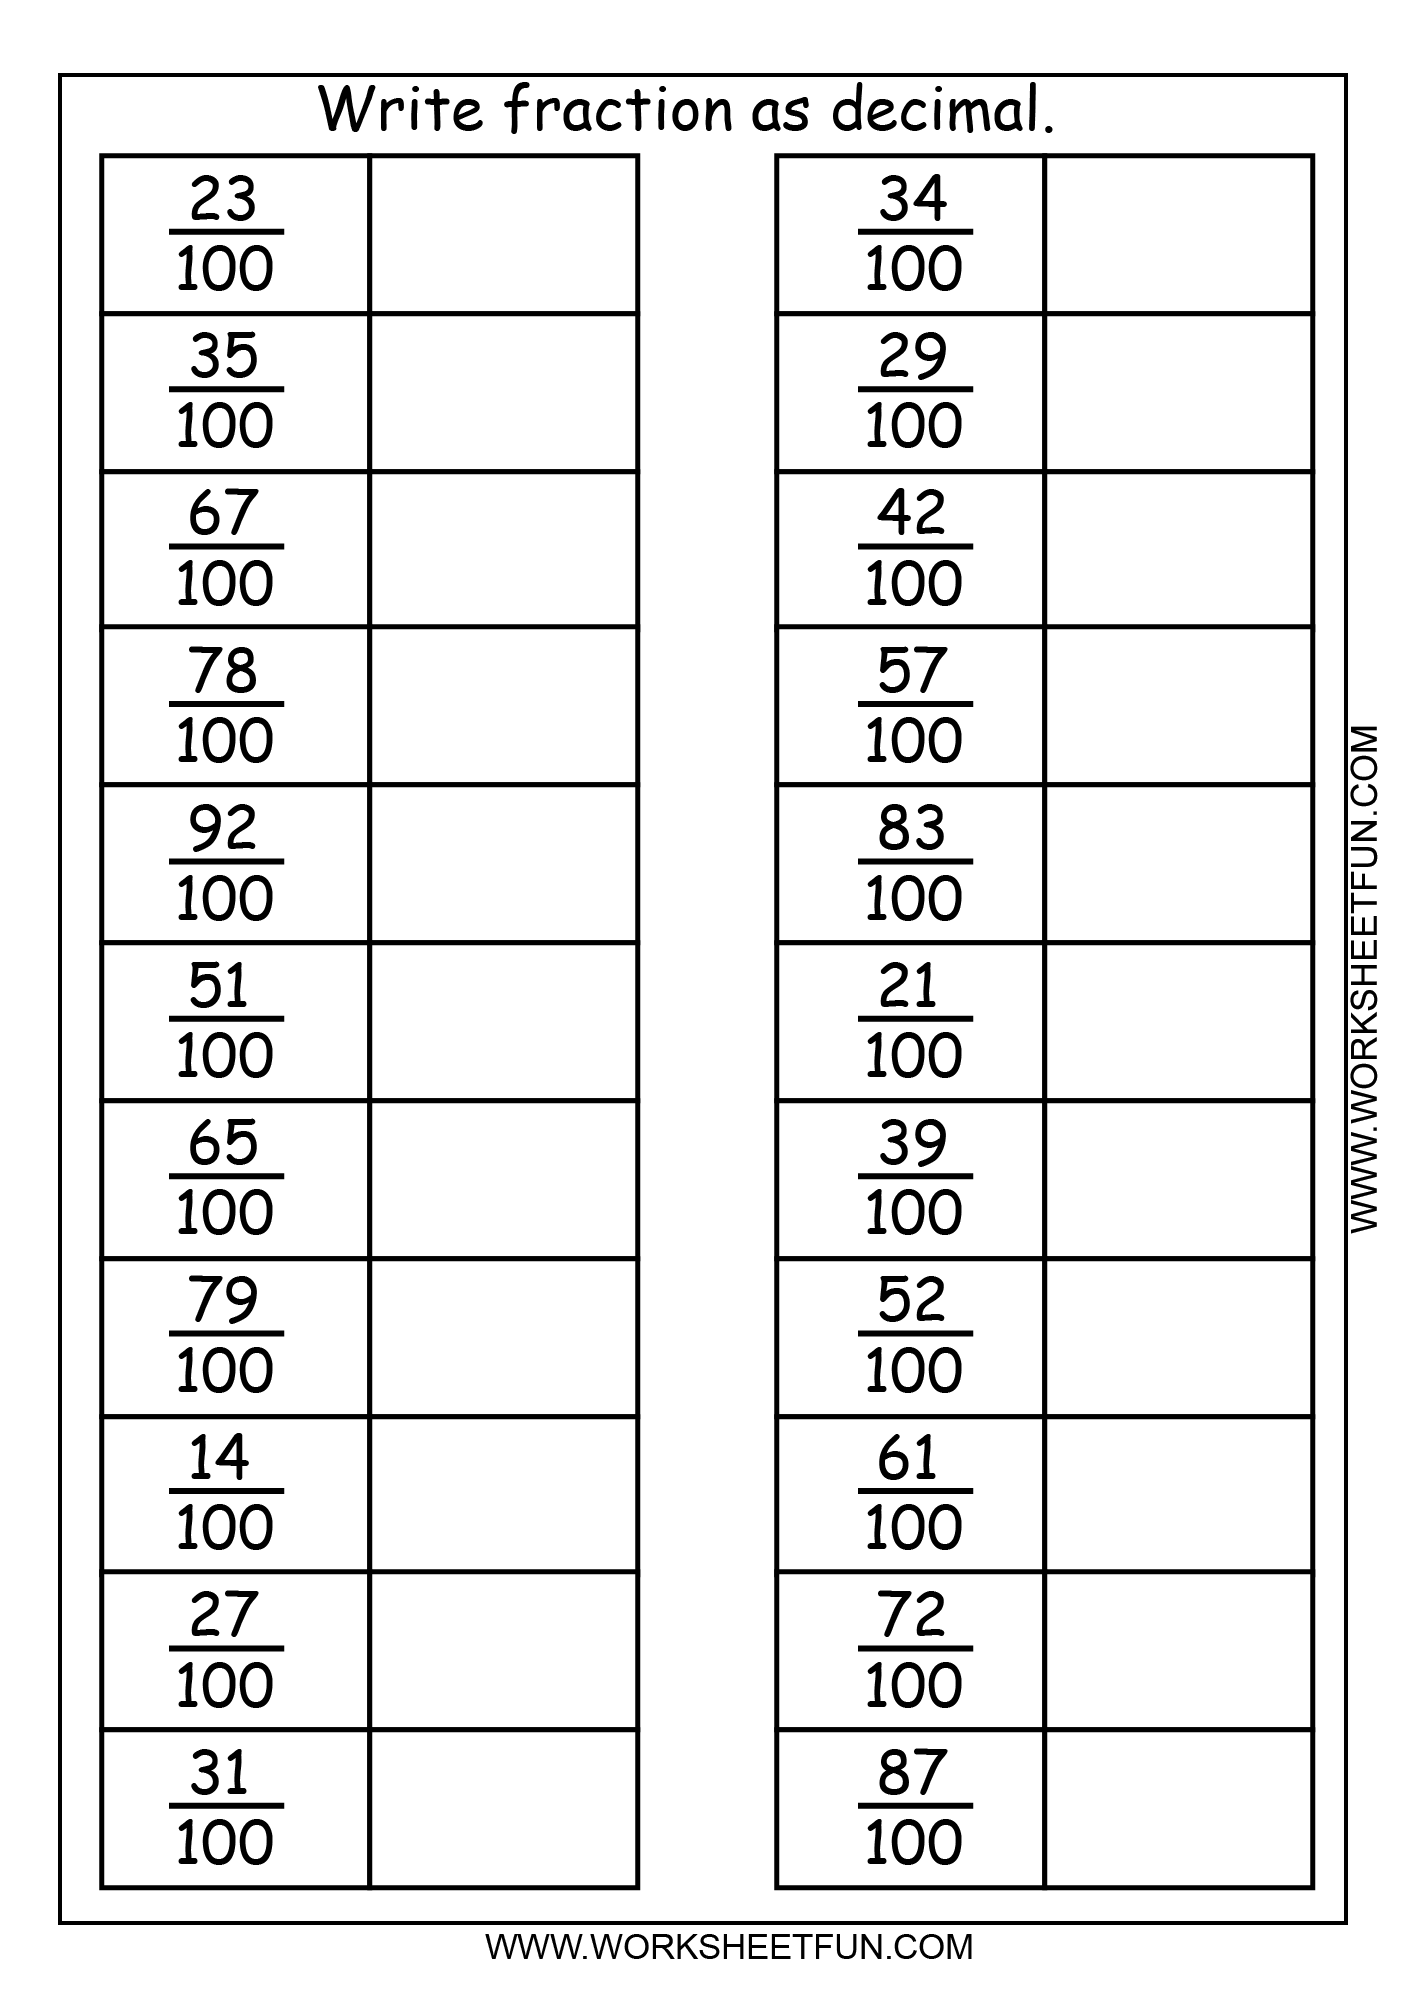 Write fraction as decimal – 3 Worksheets / FREE Printable Worksheets